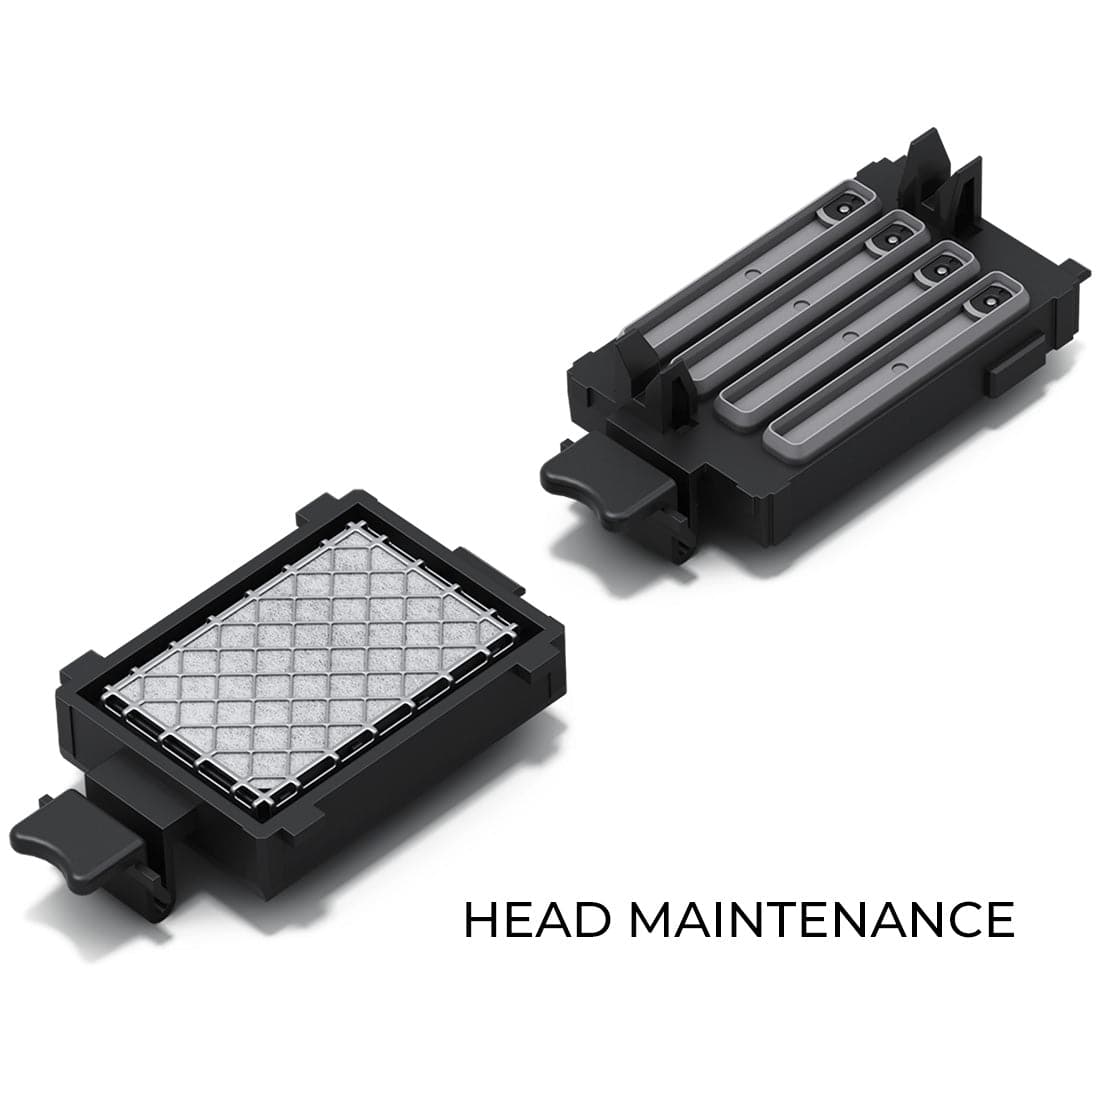 Epson® F1070 Maintenance Supplies - Joto Imaging Supplies US